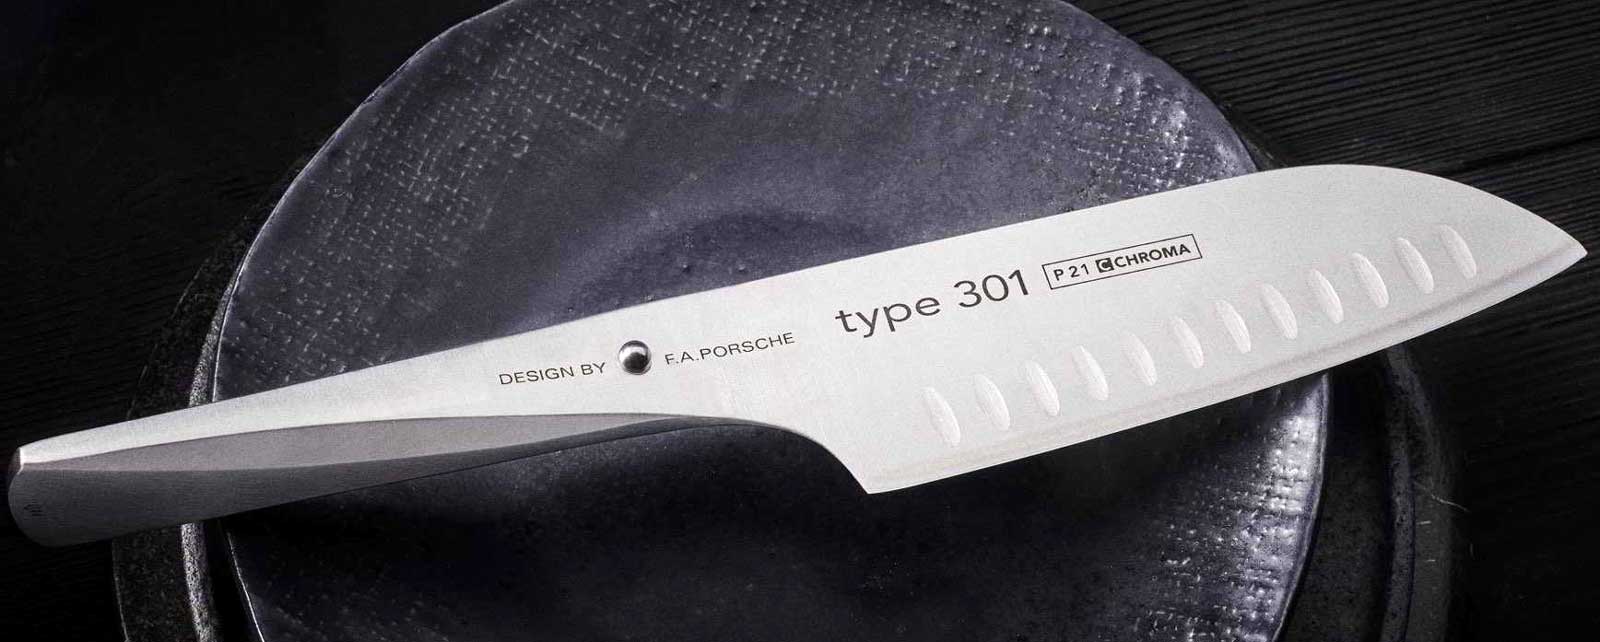 CHROMA tipo 301 - Diseno de FA Porsche - cuchillo de chef Estos innovadores cuchillos Tipo 301, disenados por la empresa de diseno FA Porsche, abren un nuevo capitulo en el desarrollo de cuchillos de cocina.